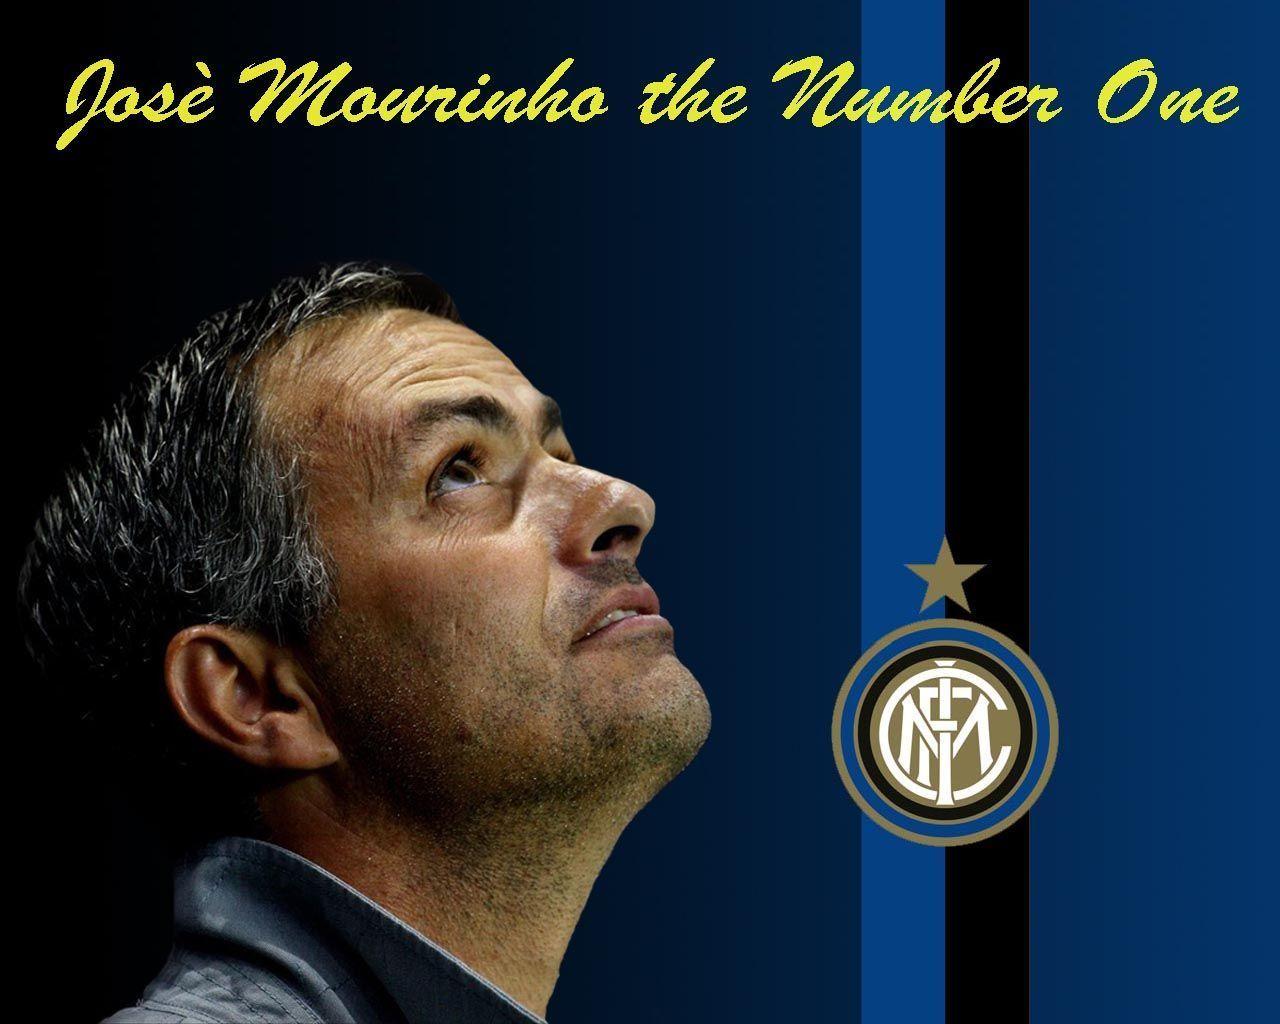 Fonds d&;écran Jose Mourinho, tous les wallpaper Jose Mourinho